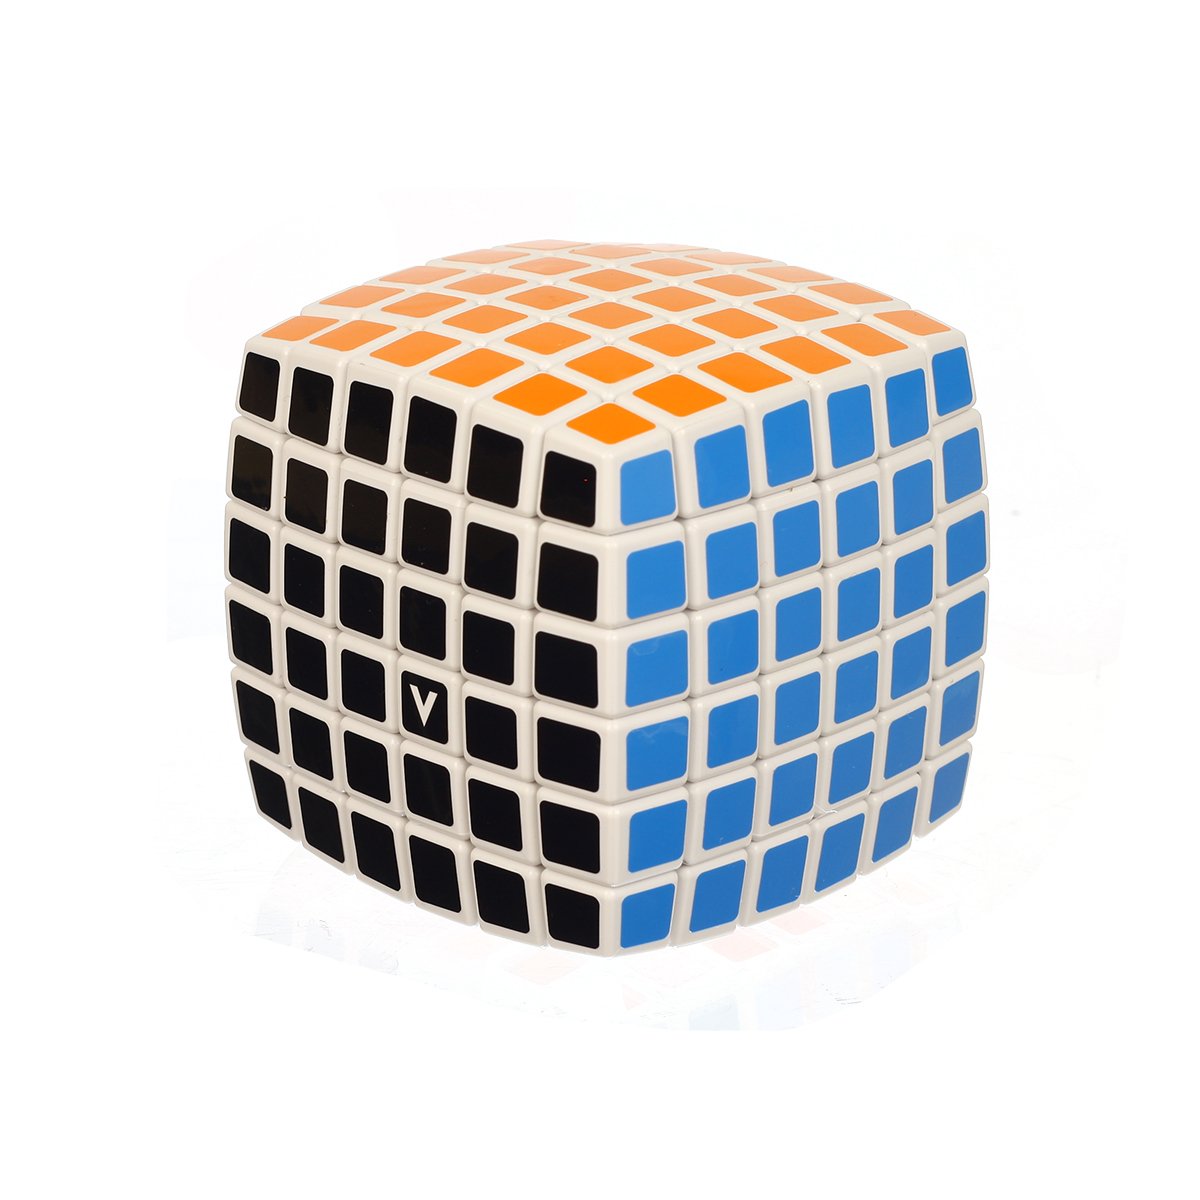 Cube 7